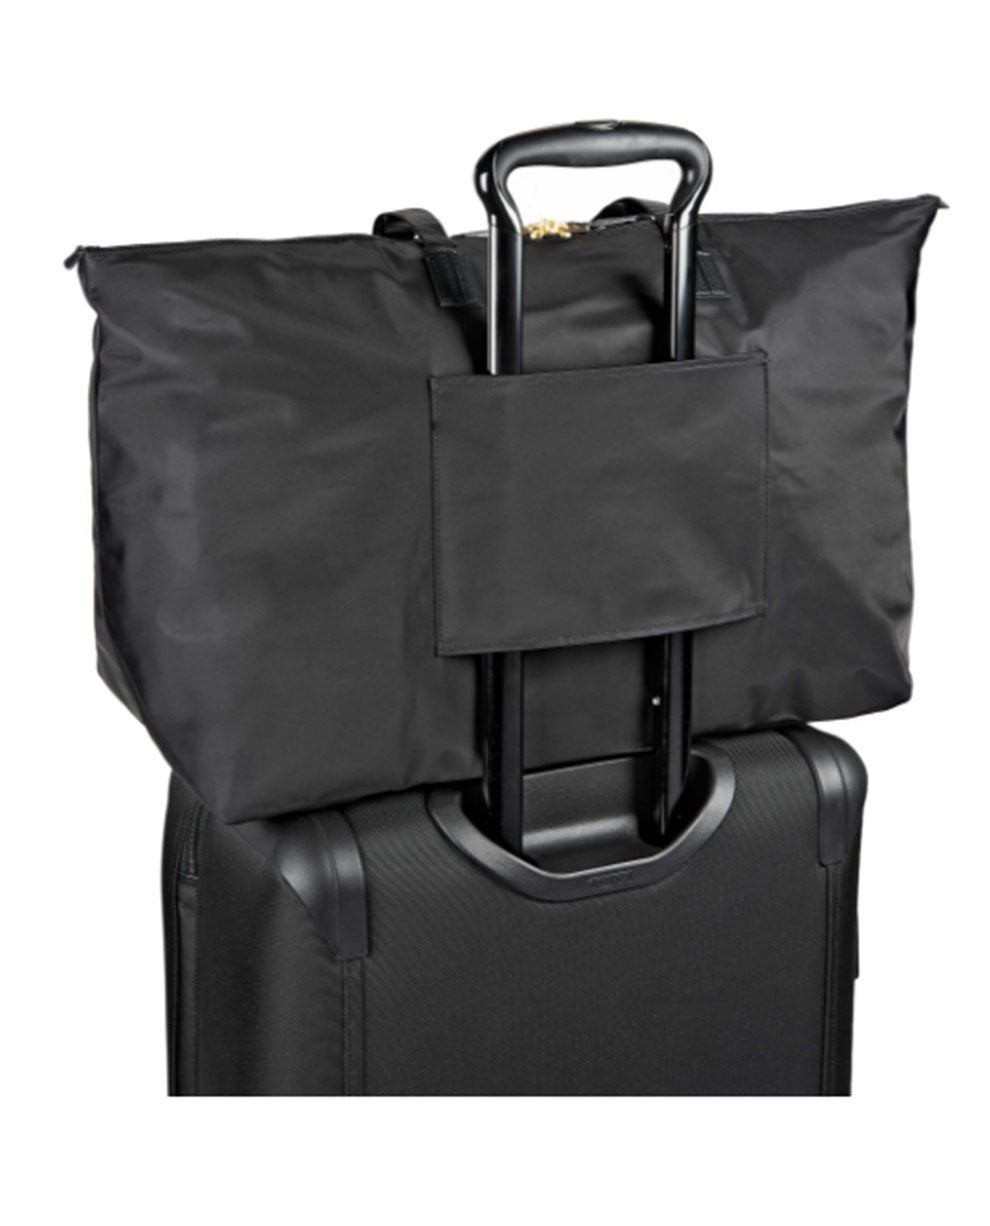 Fold-able Travel Bag - Margaret Cox - Black